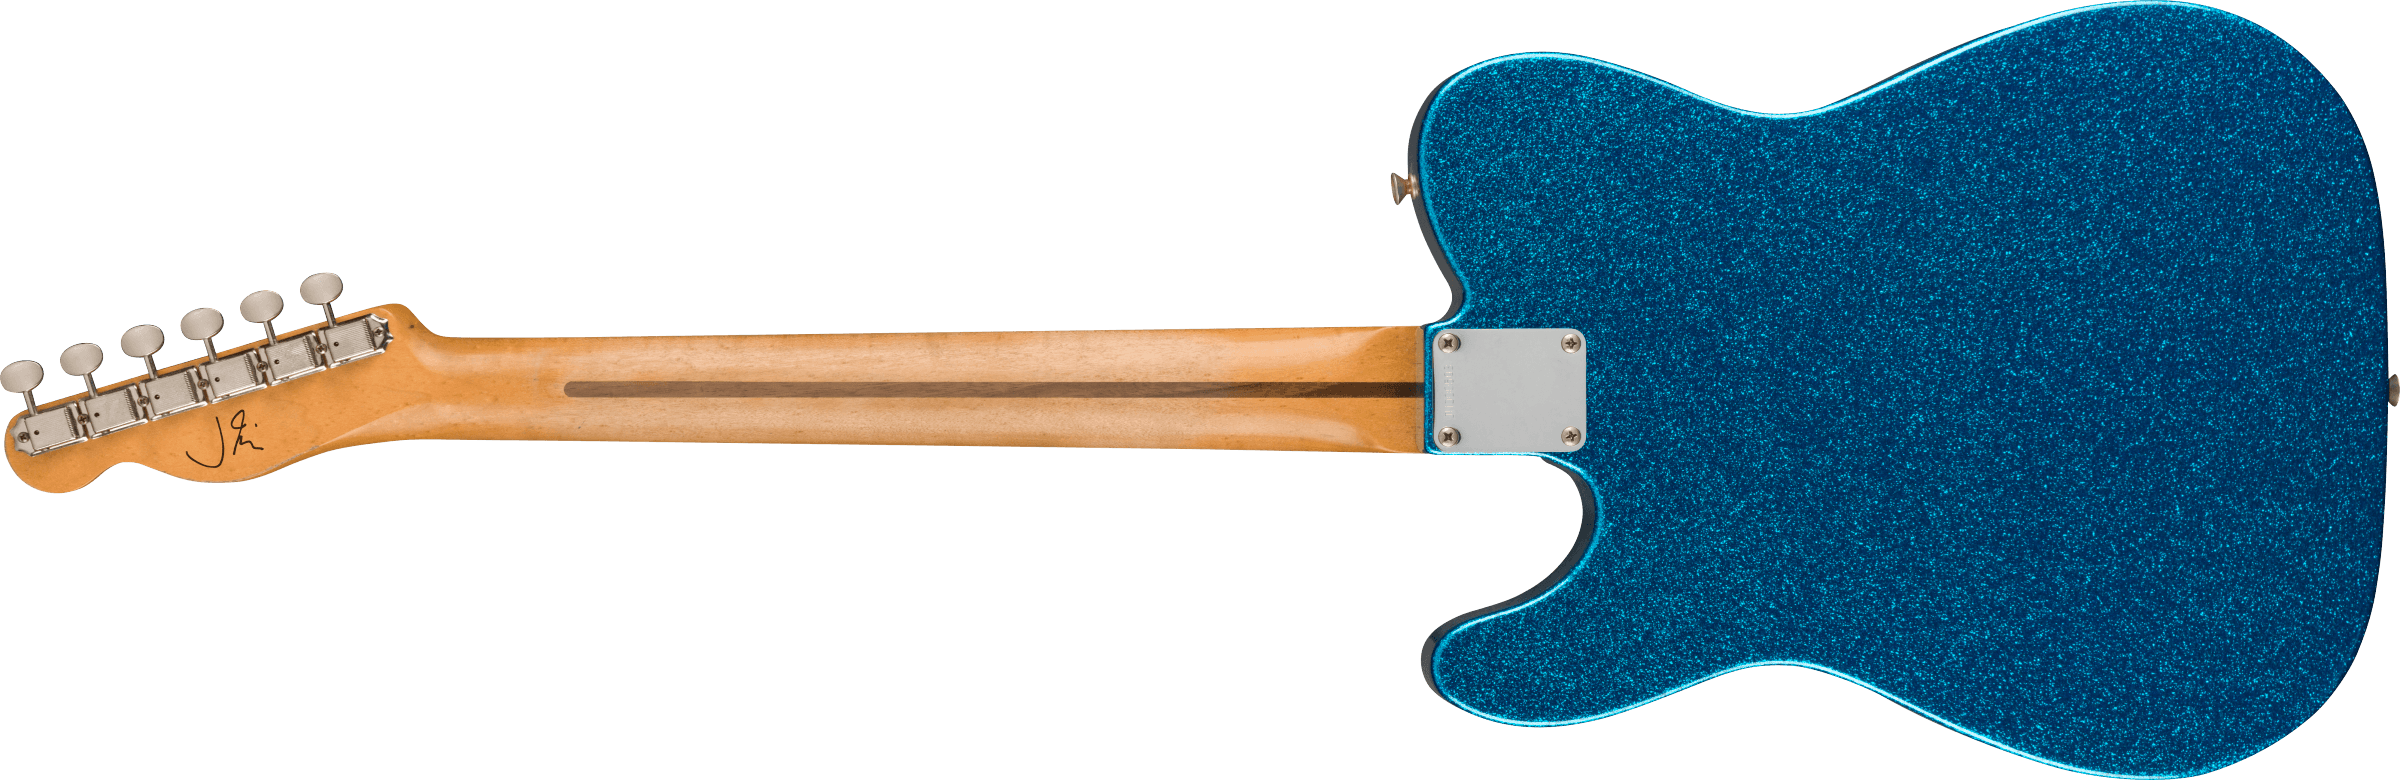 Fender Telecaster J. Mascis Signature 2s Ht Mn - Sparkle Blue - Tel shape electric guitar - Variation 1